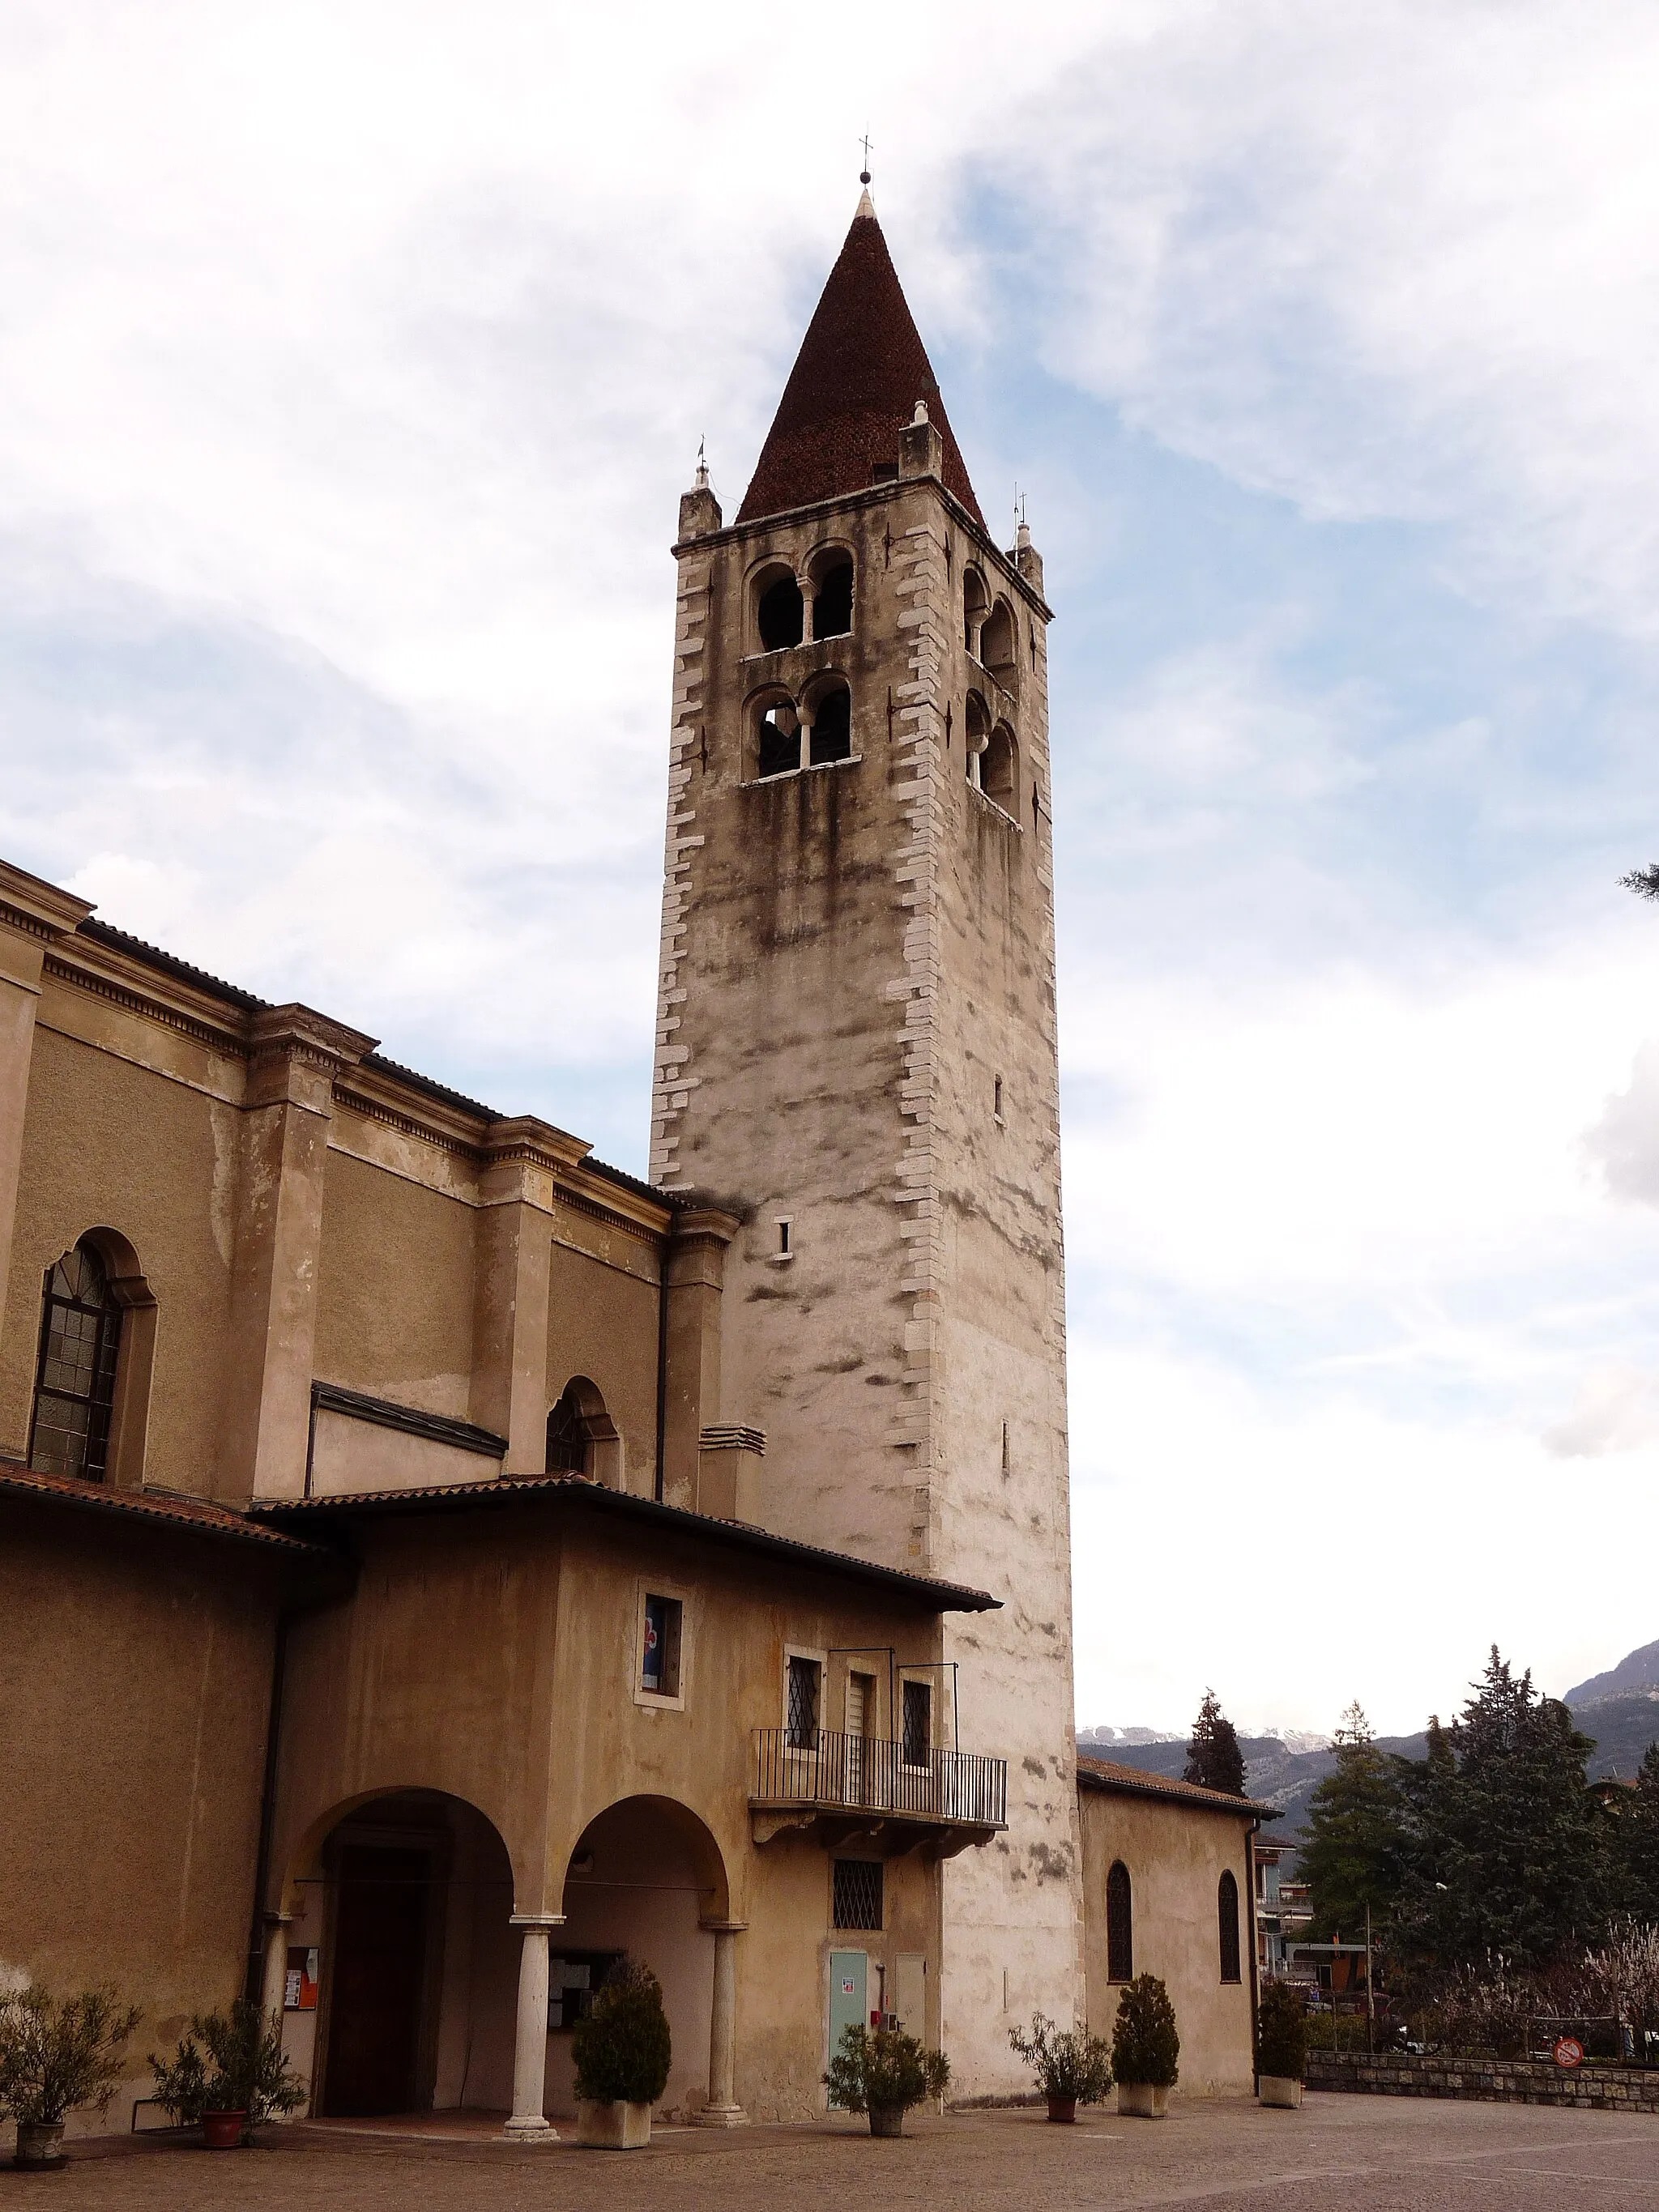 Kuva kohteesta Provincia Autonoma di Trento